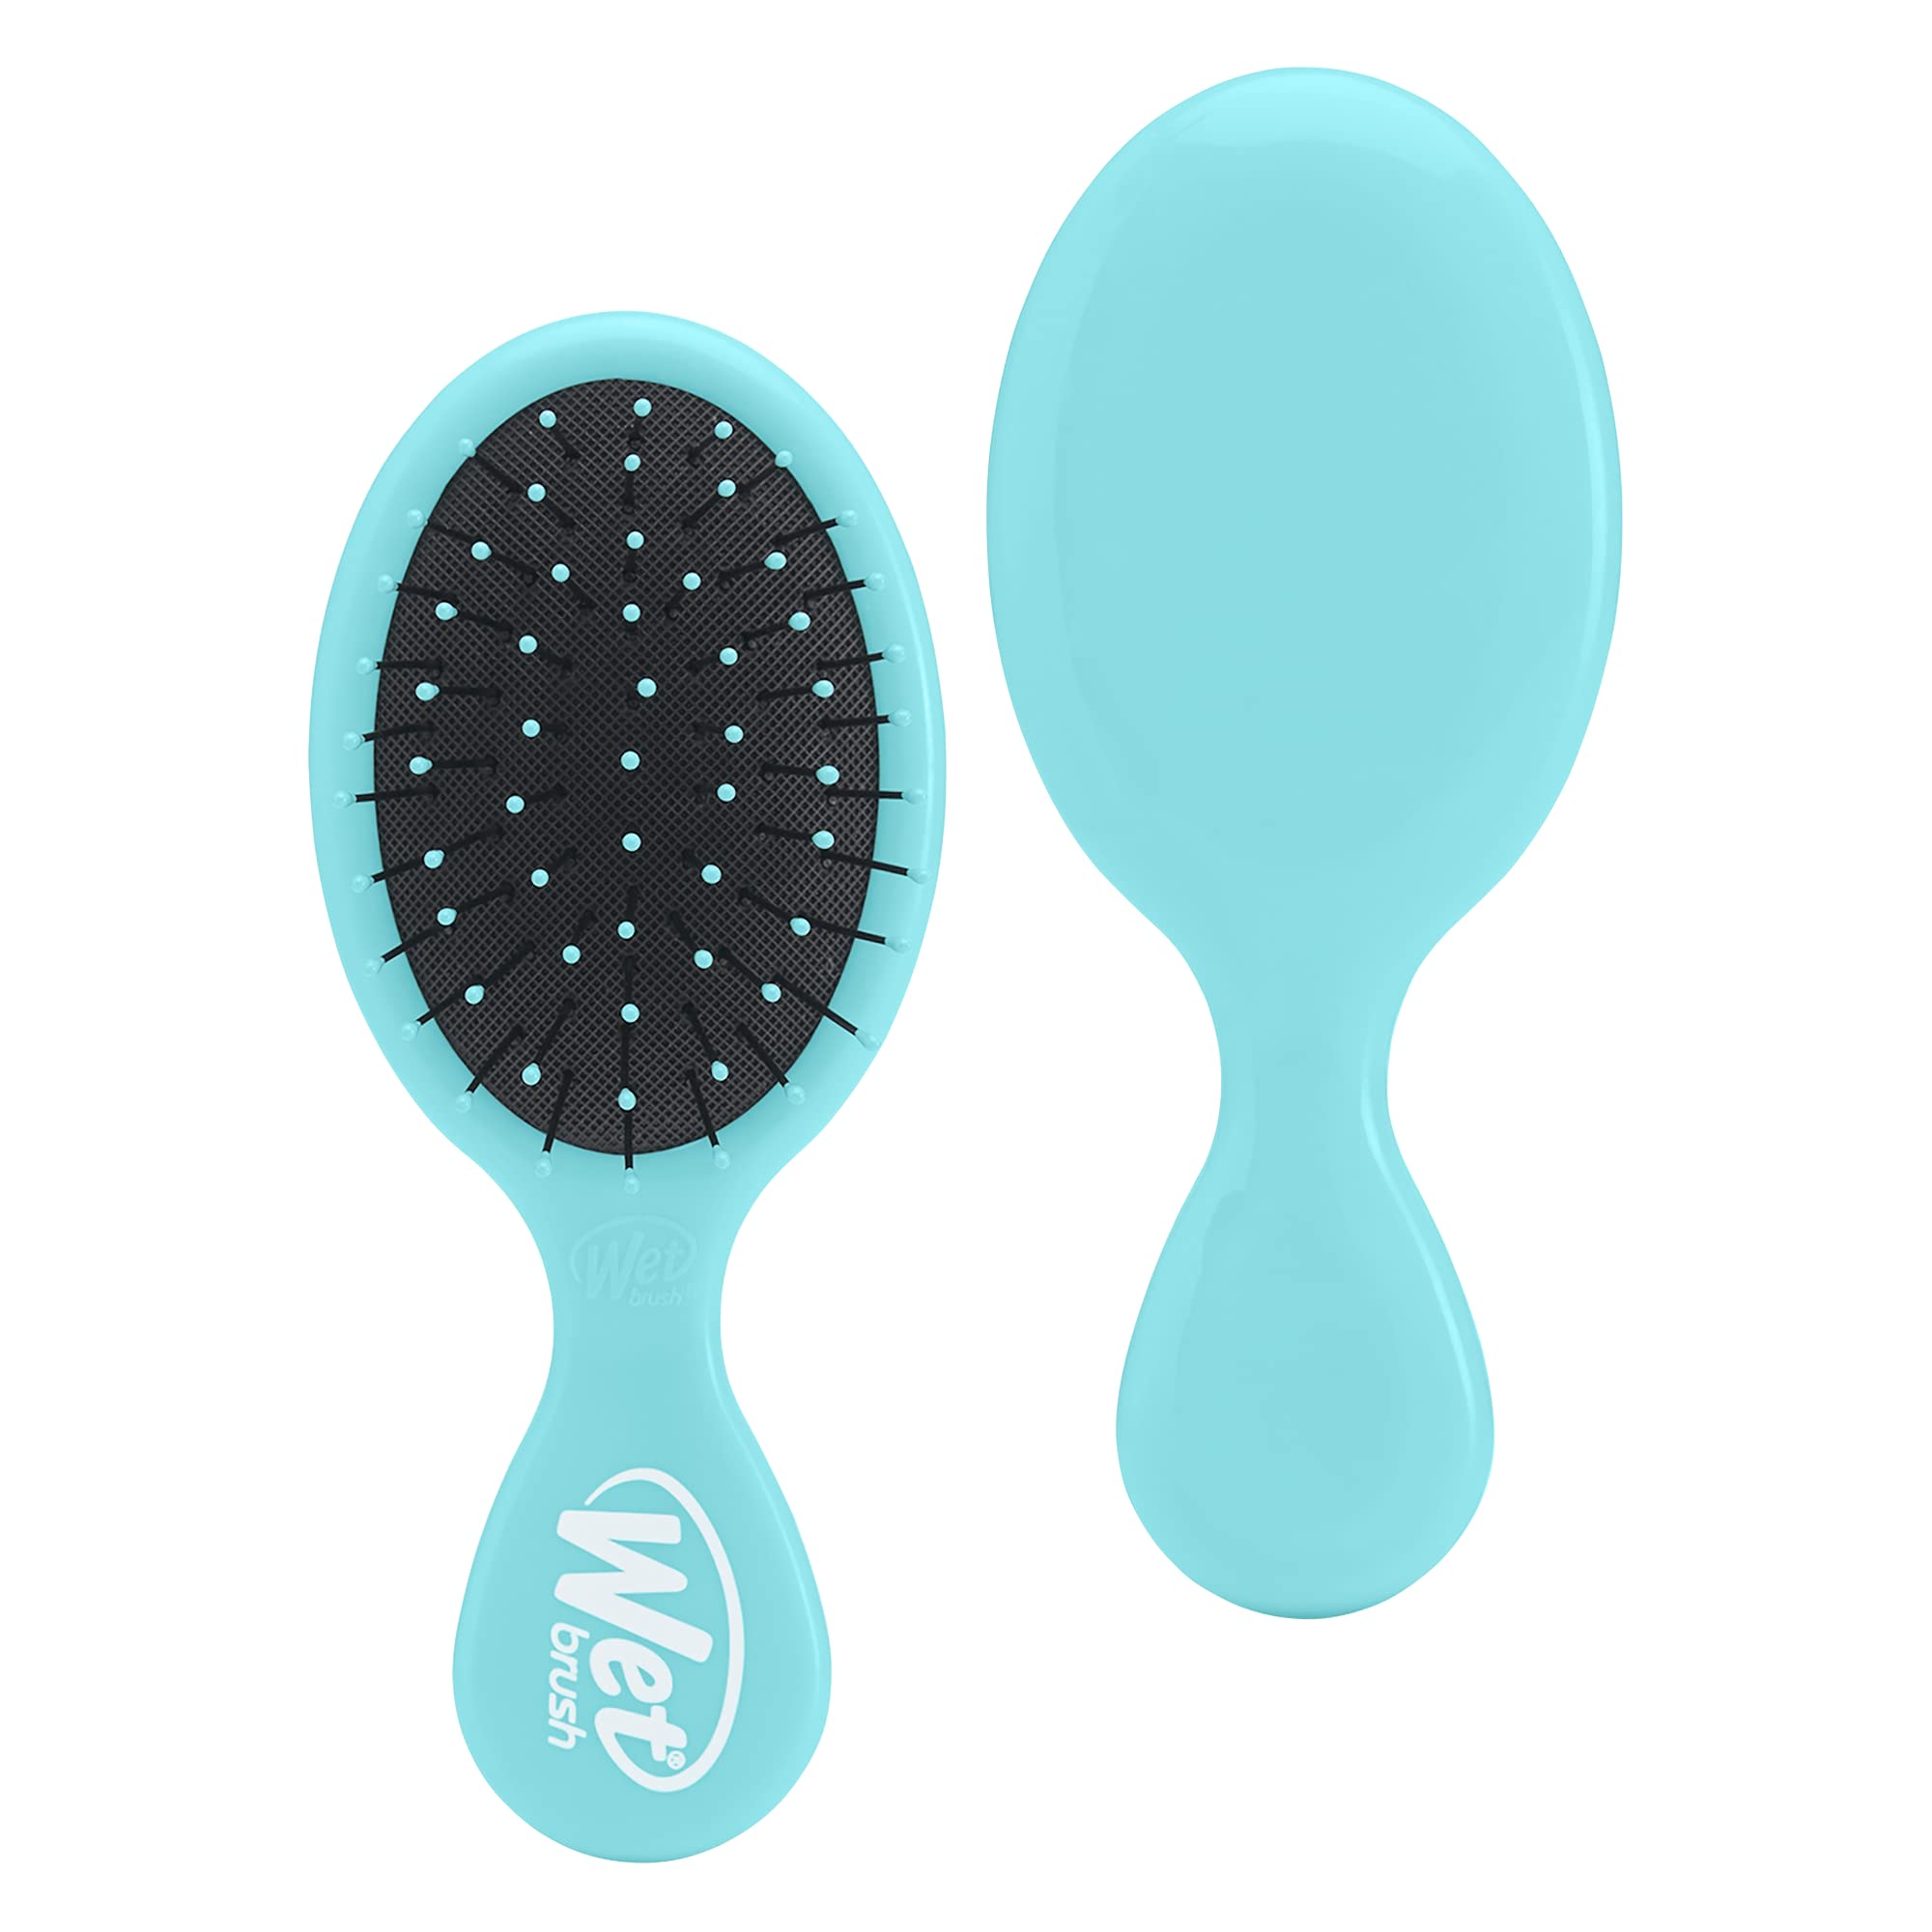 Wet Brush Squirt Detangler Hair Brushes, Amazon Exclusive Aqua - Mini Detangling Comb with Ultra-Soft IntelliFlex Bristles Glide Through Tangles - Pain-Free Hair Accessories for All Hair Types